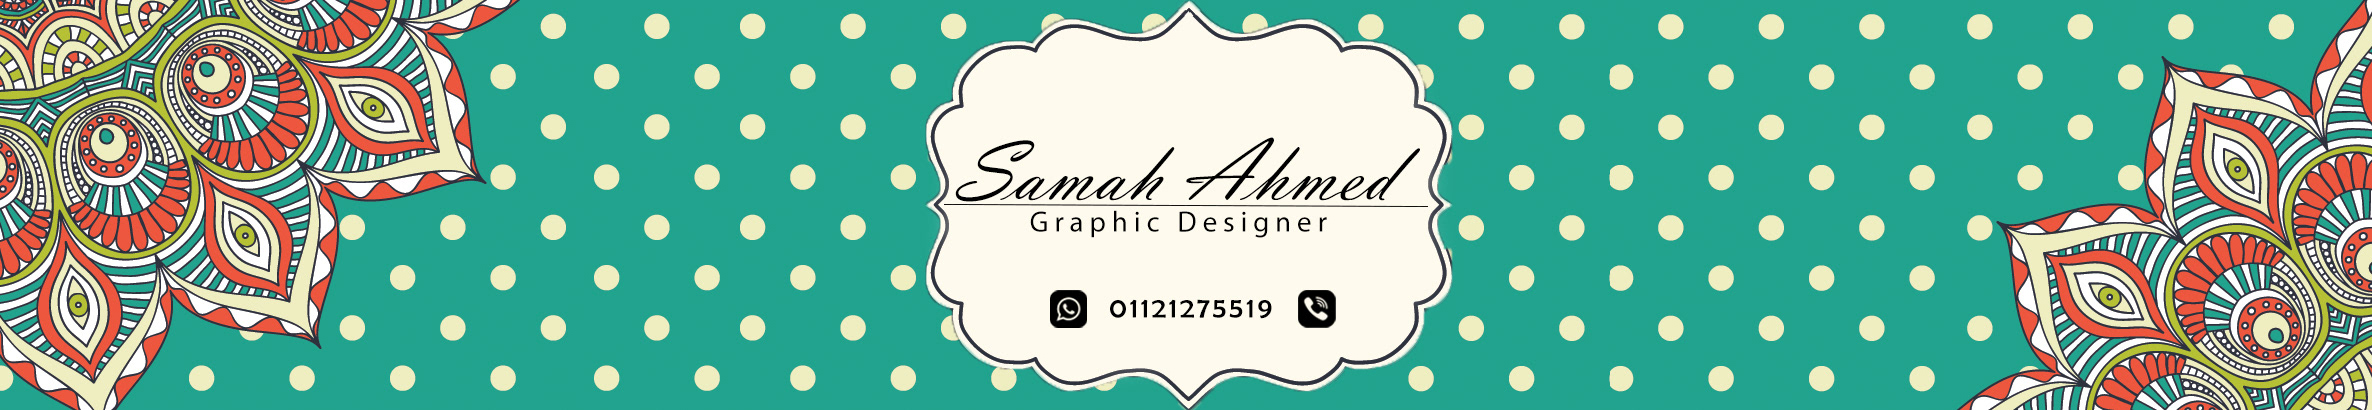 Samah Ahmed's profile banner